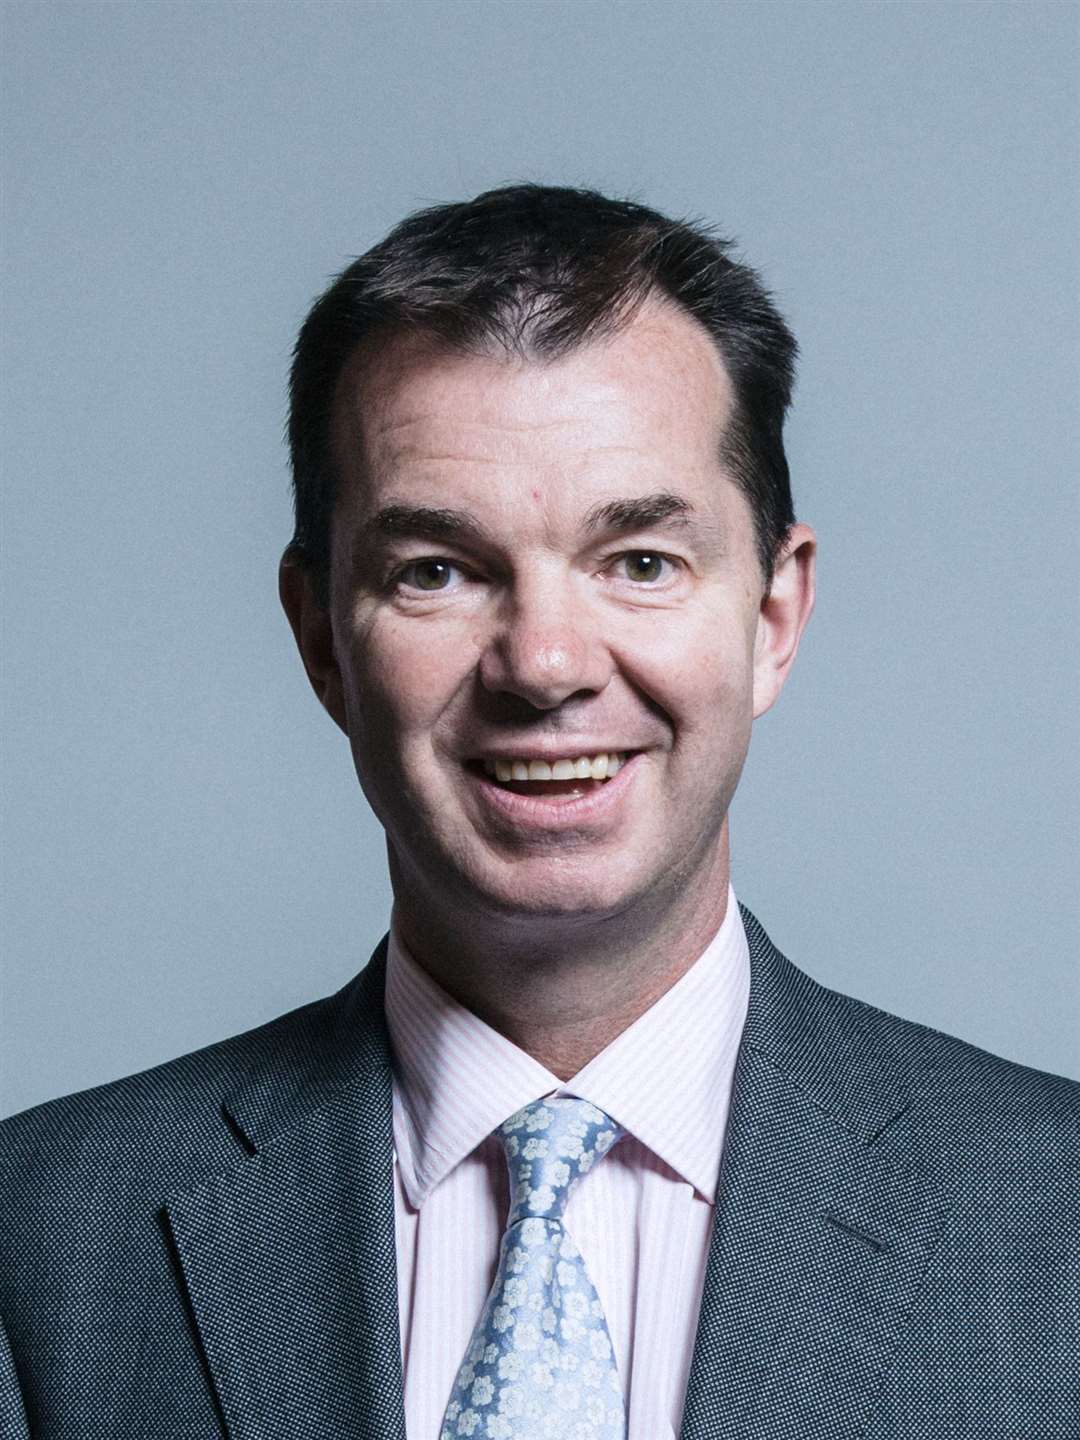 Minister for Employment Guy Opperman MP.